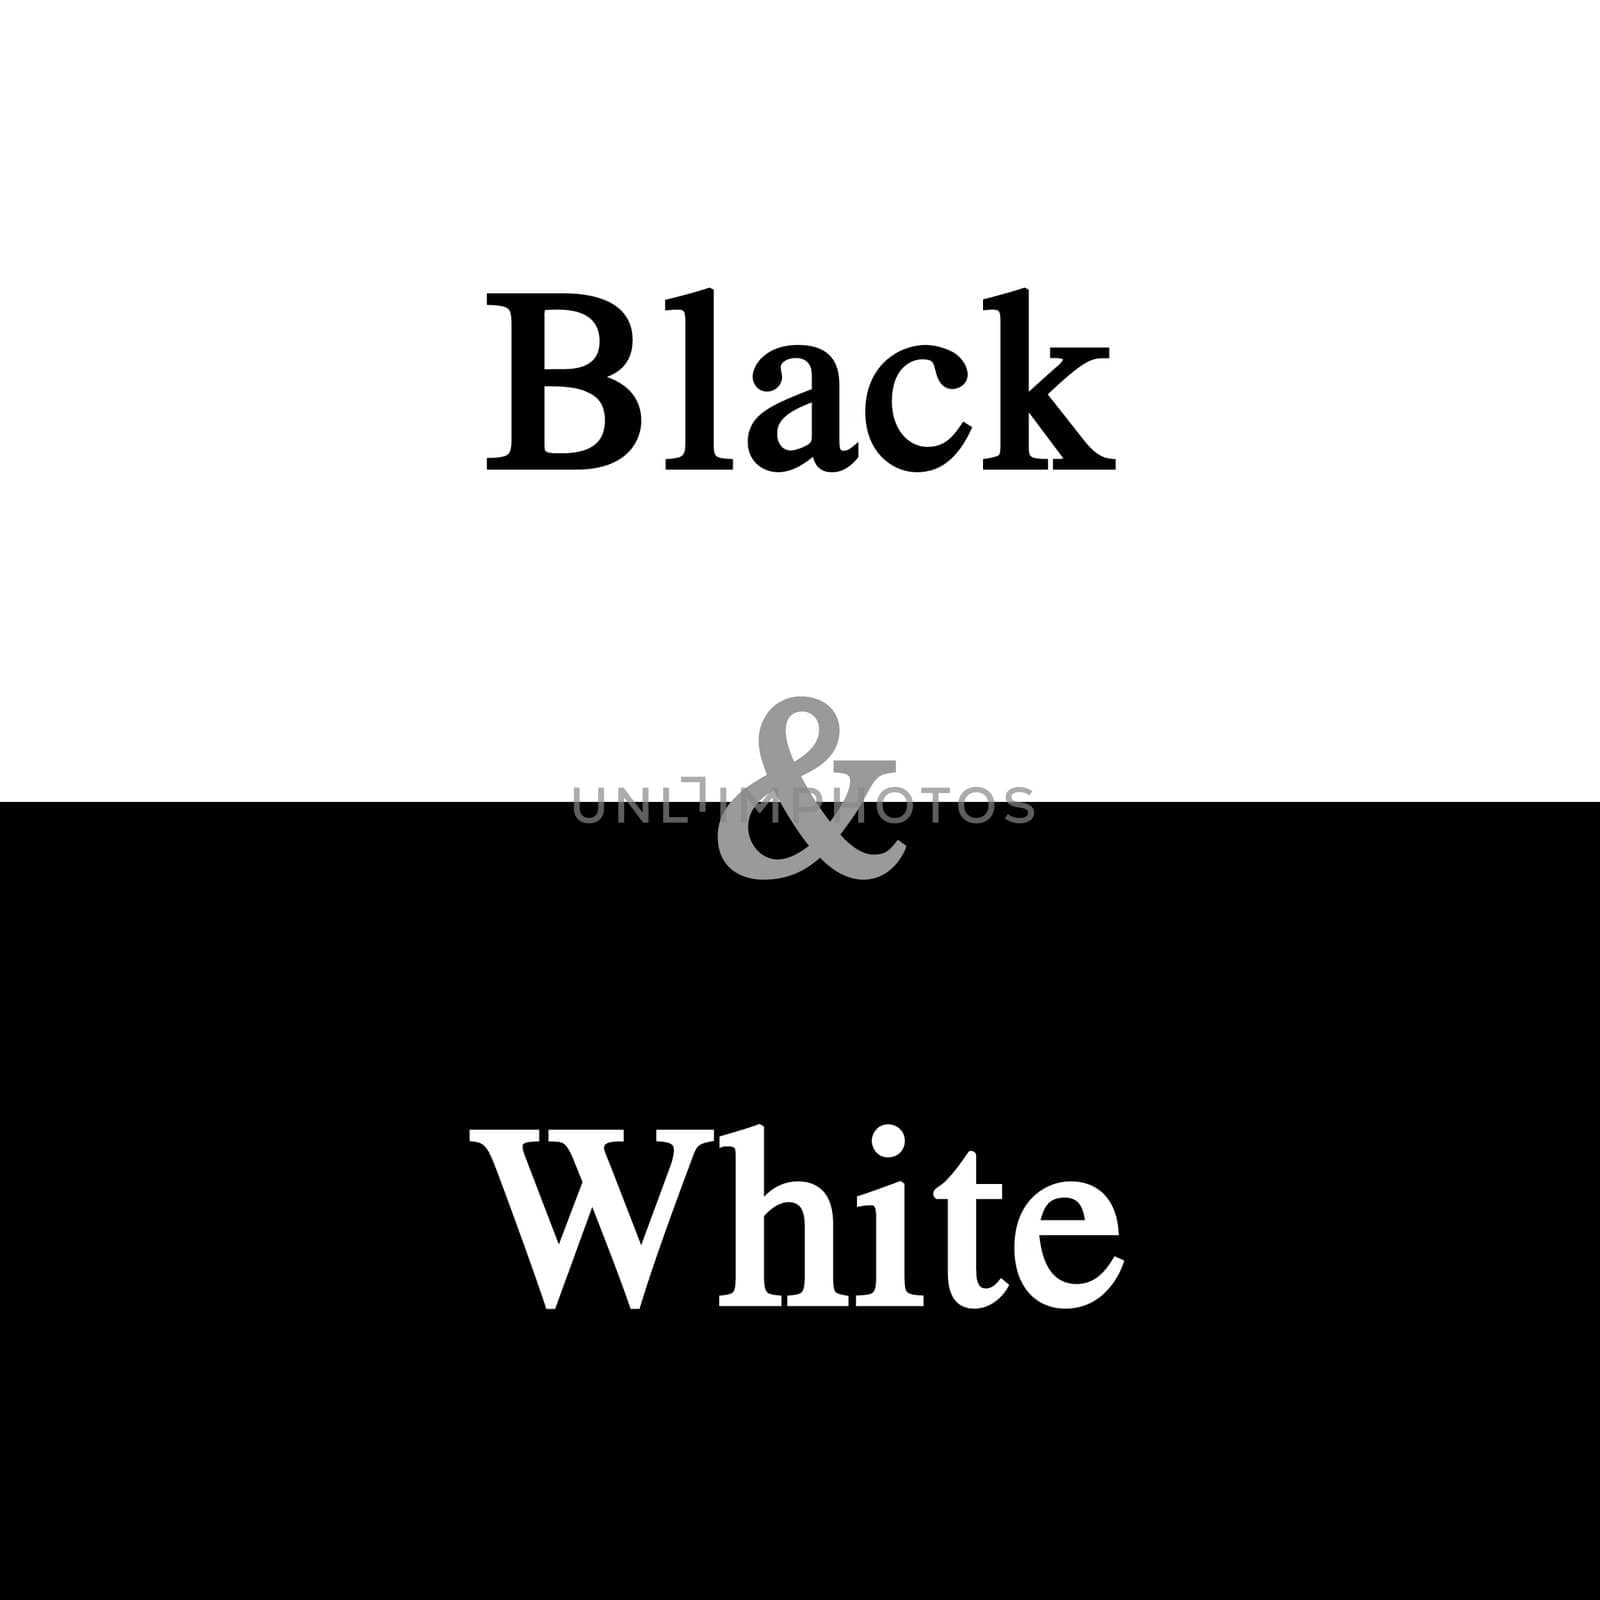 Black and white concept